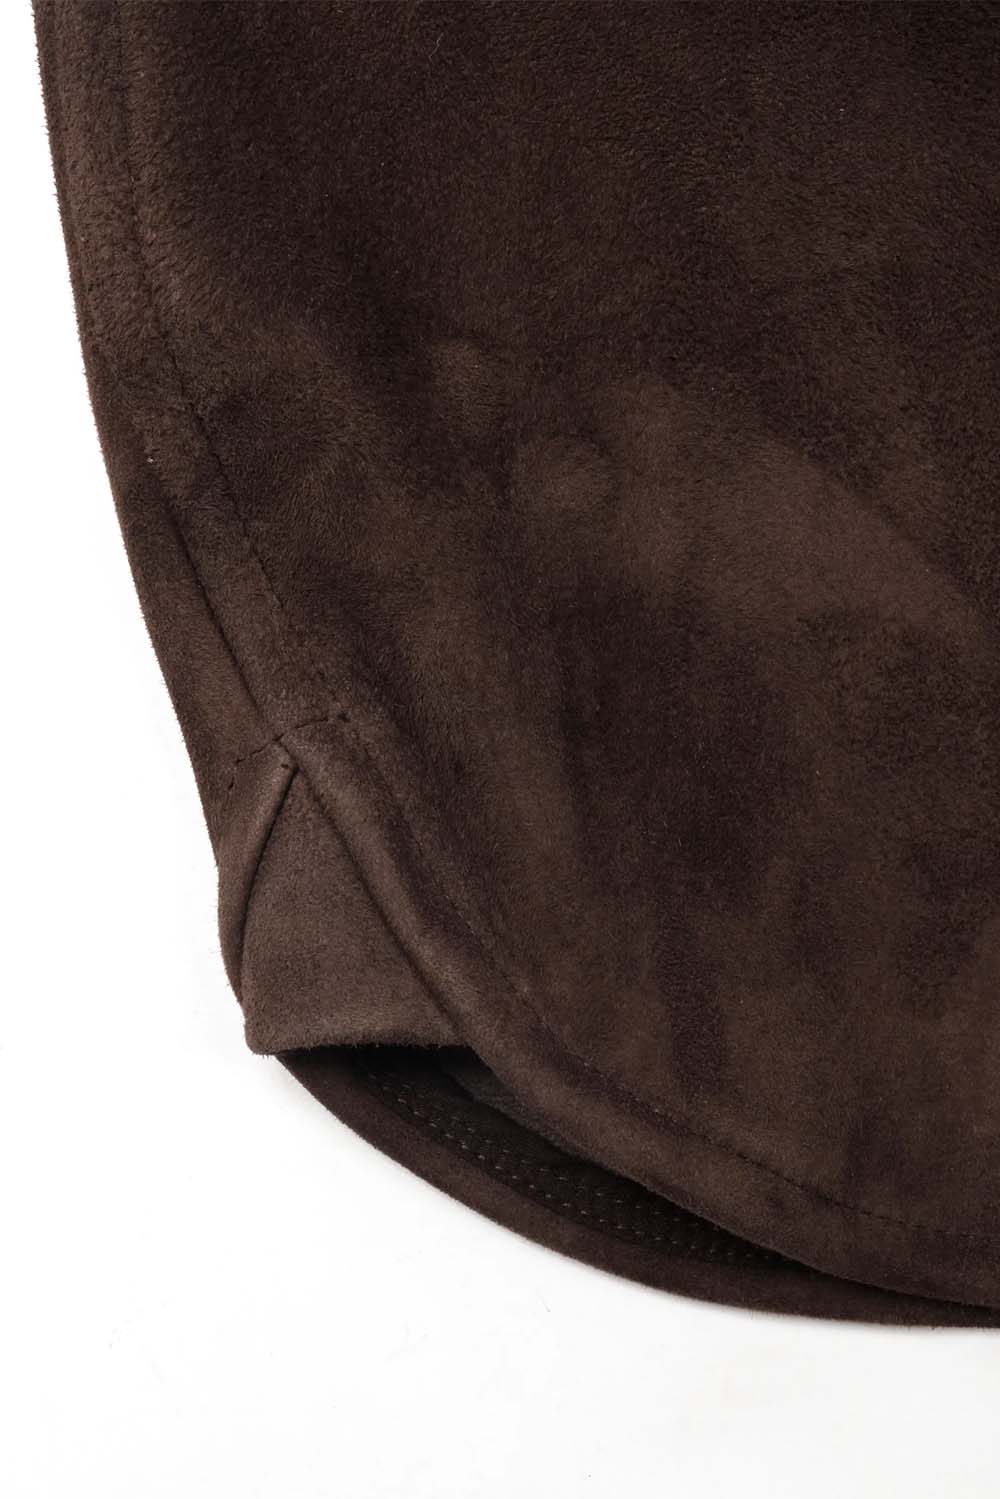 Freenote Cloth - Packard - Chocolate Goatskin - Hem